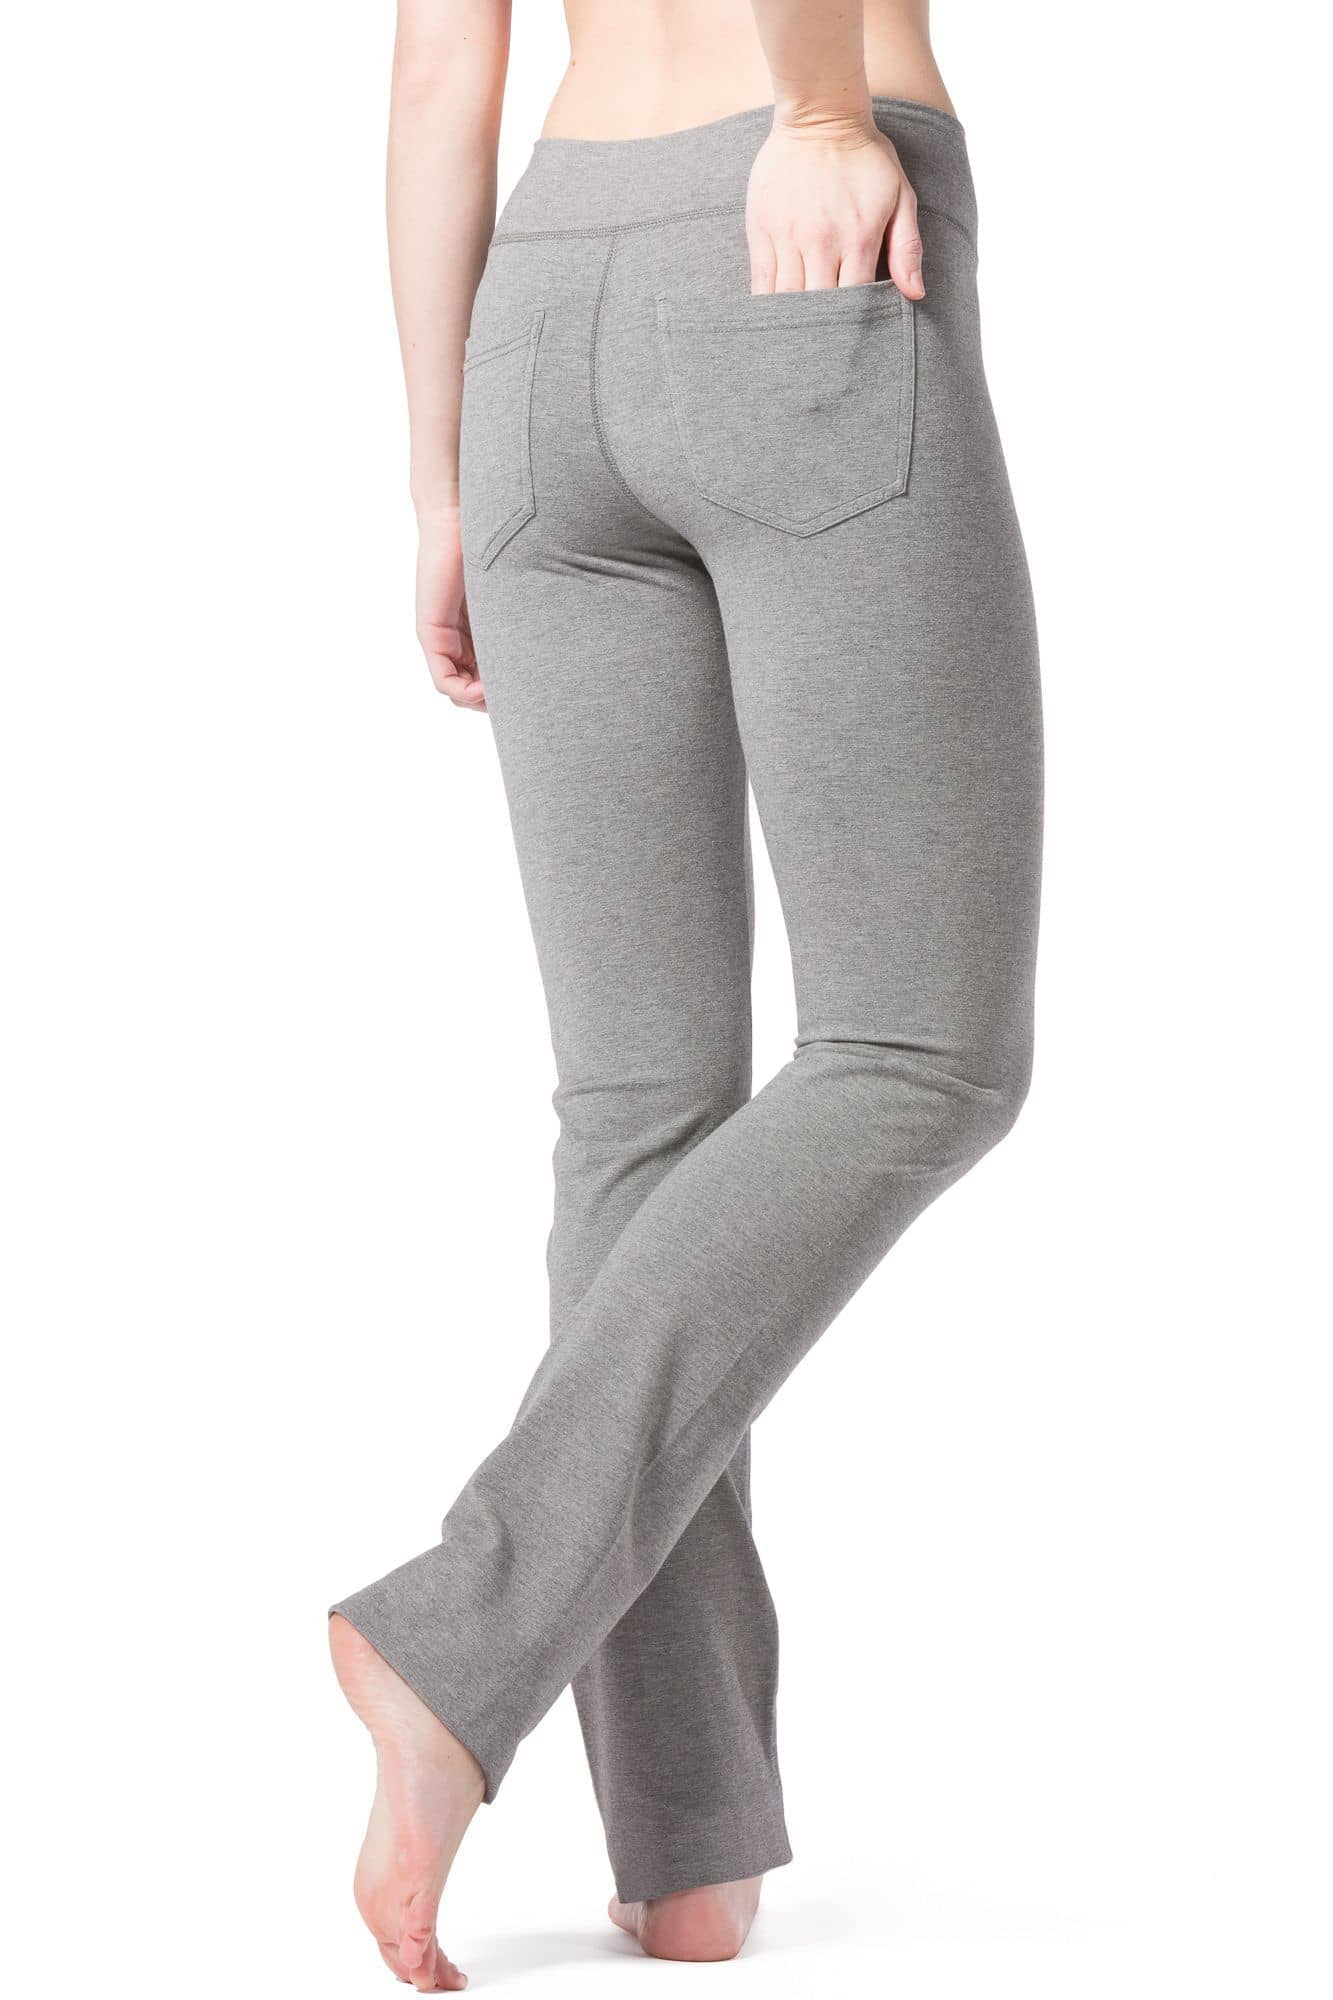 Aayomet Yoga Pants Straight Leg Yoga Pants for Women with Pockets